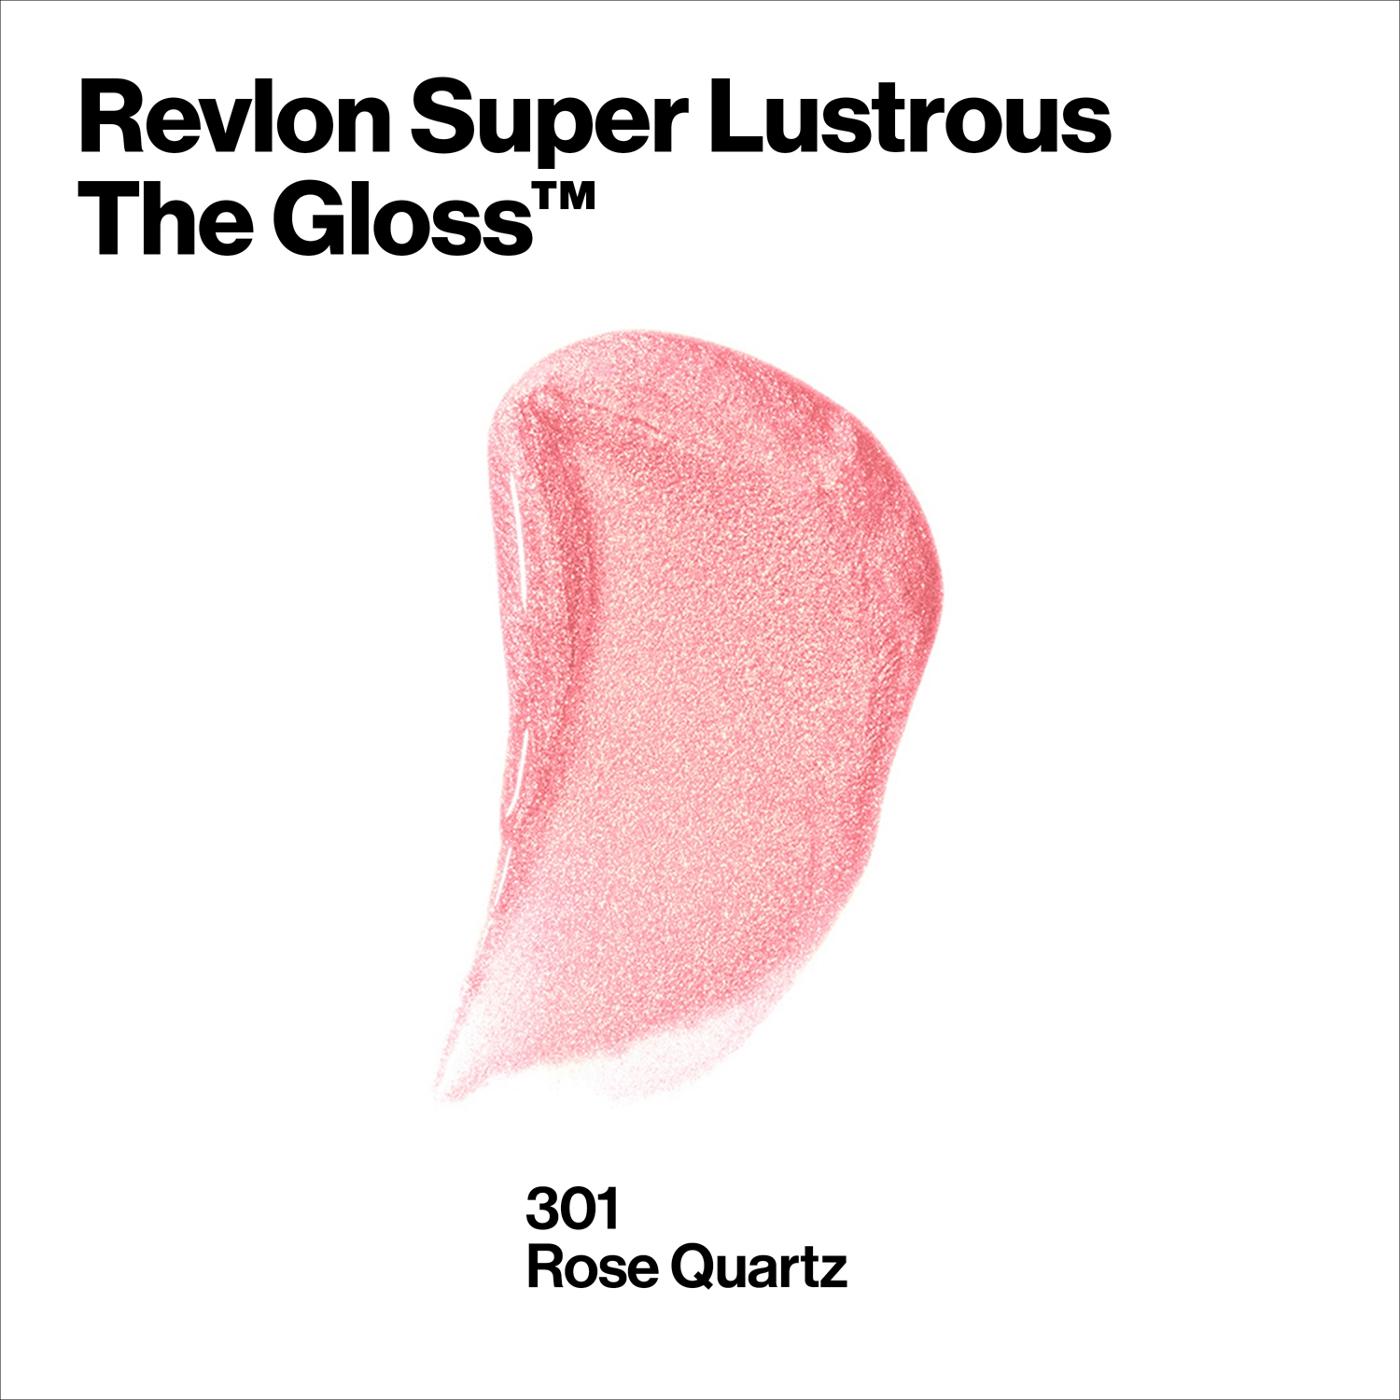 Revlon Super Lustrous The Gloss, 301 Rose Quartz; image 4 of 7